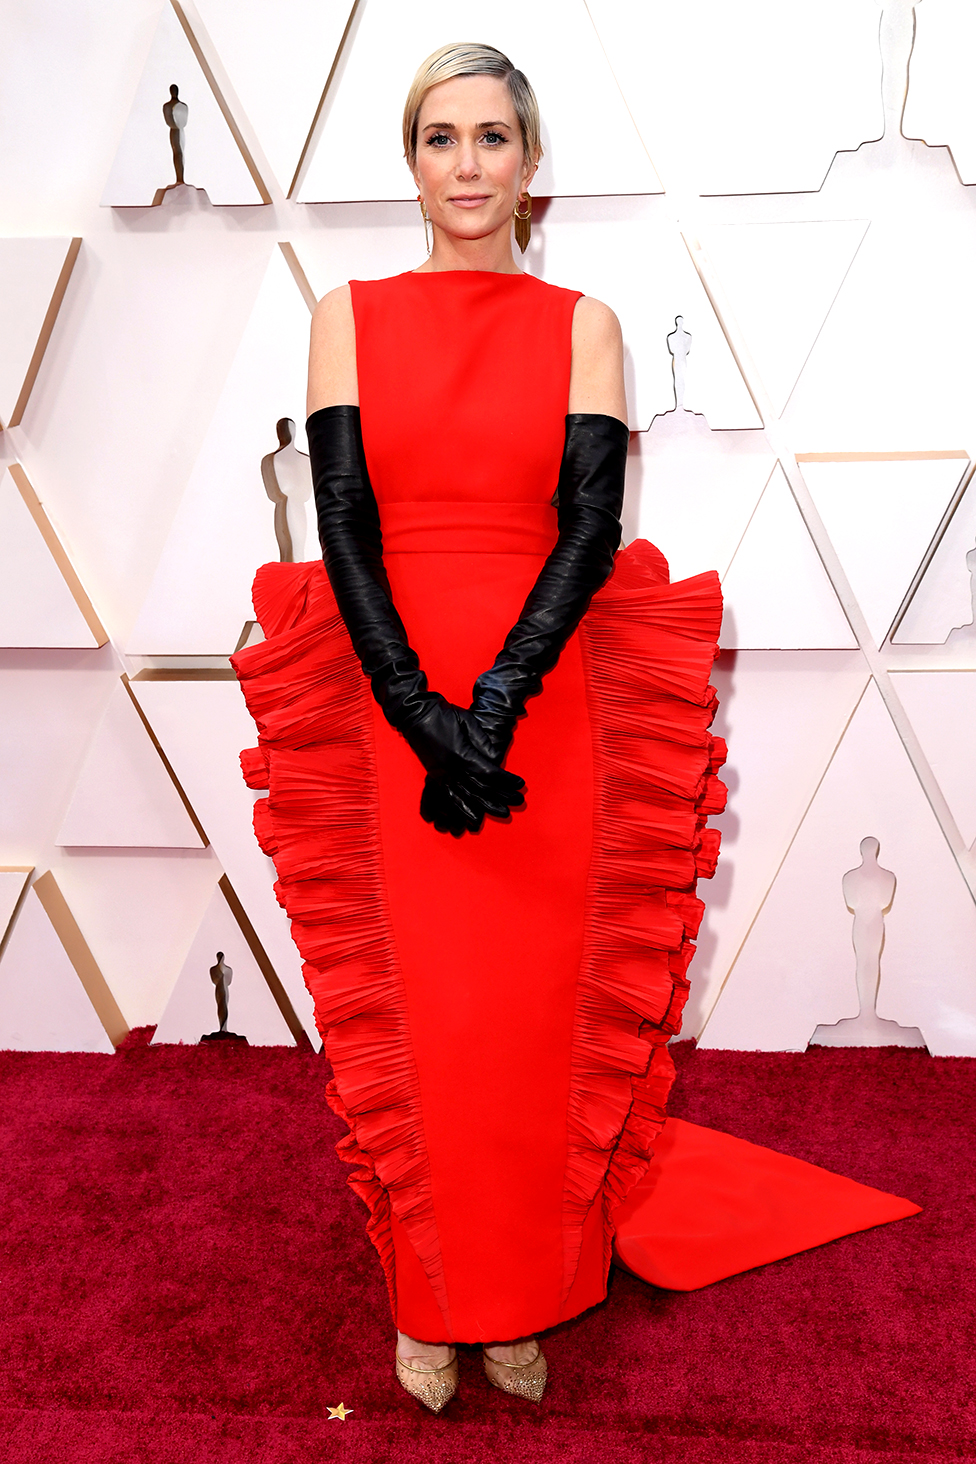 Kristen Wiig on the red carpet